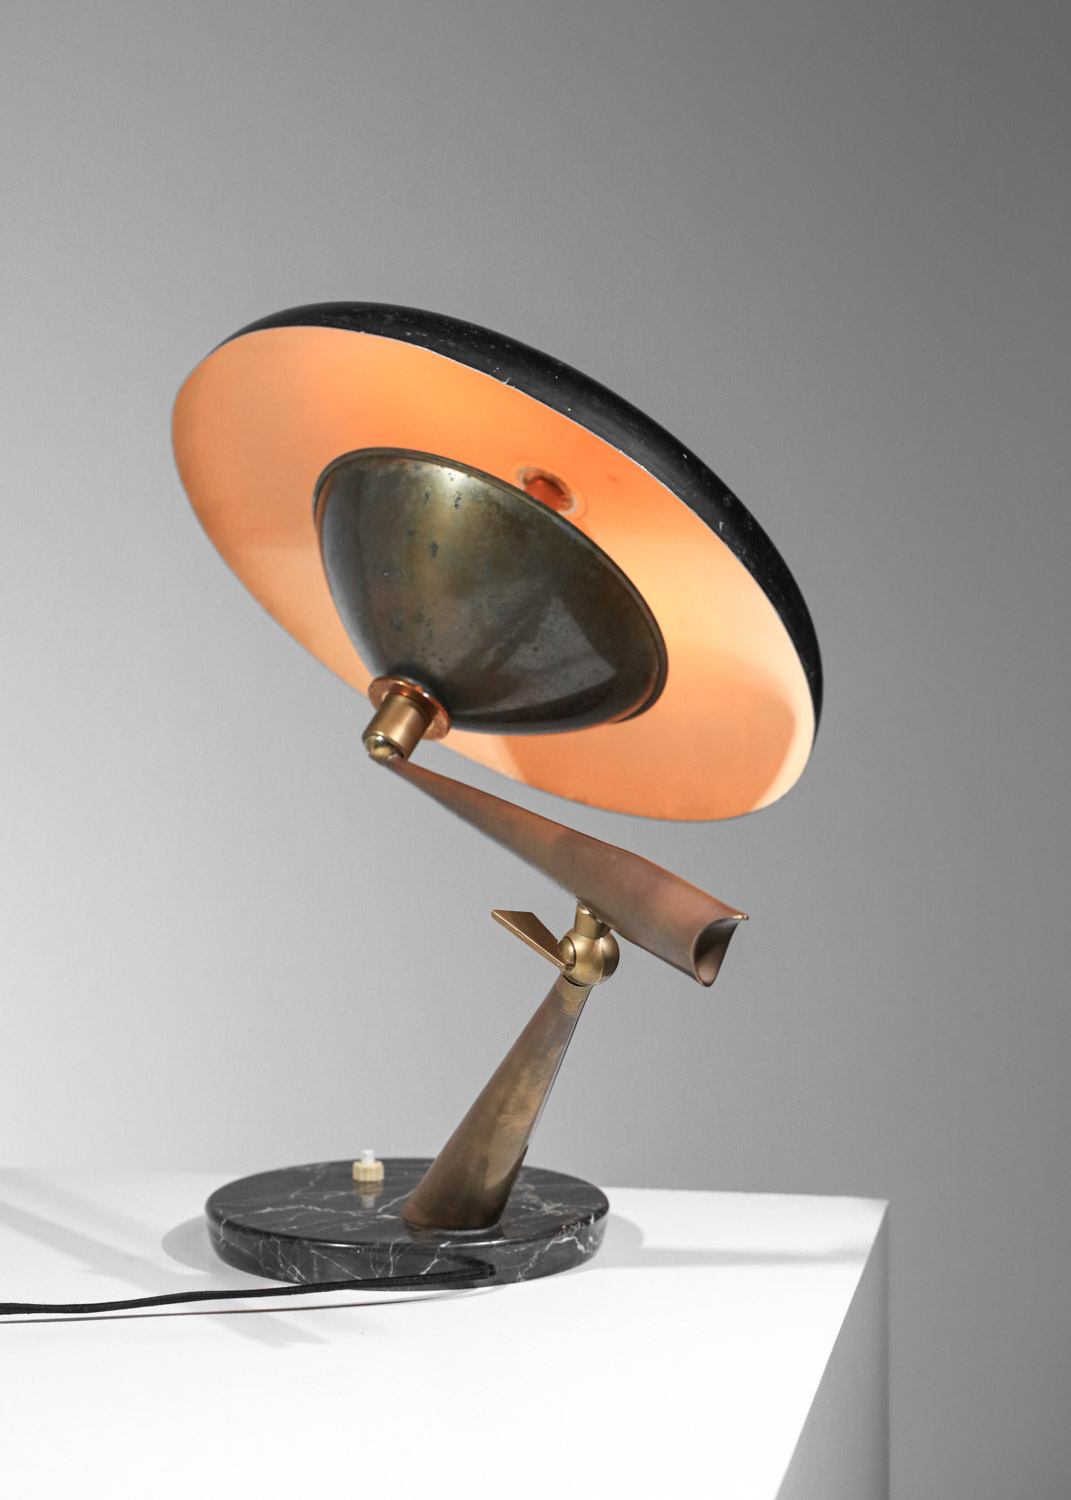 Observatory Vaccinere lav lektier Italian table lamp 50's attr. to Lumen 60's style Arredoluce Stillux – H130  – Danke Galerie